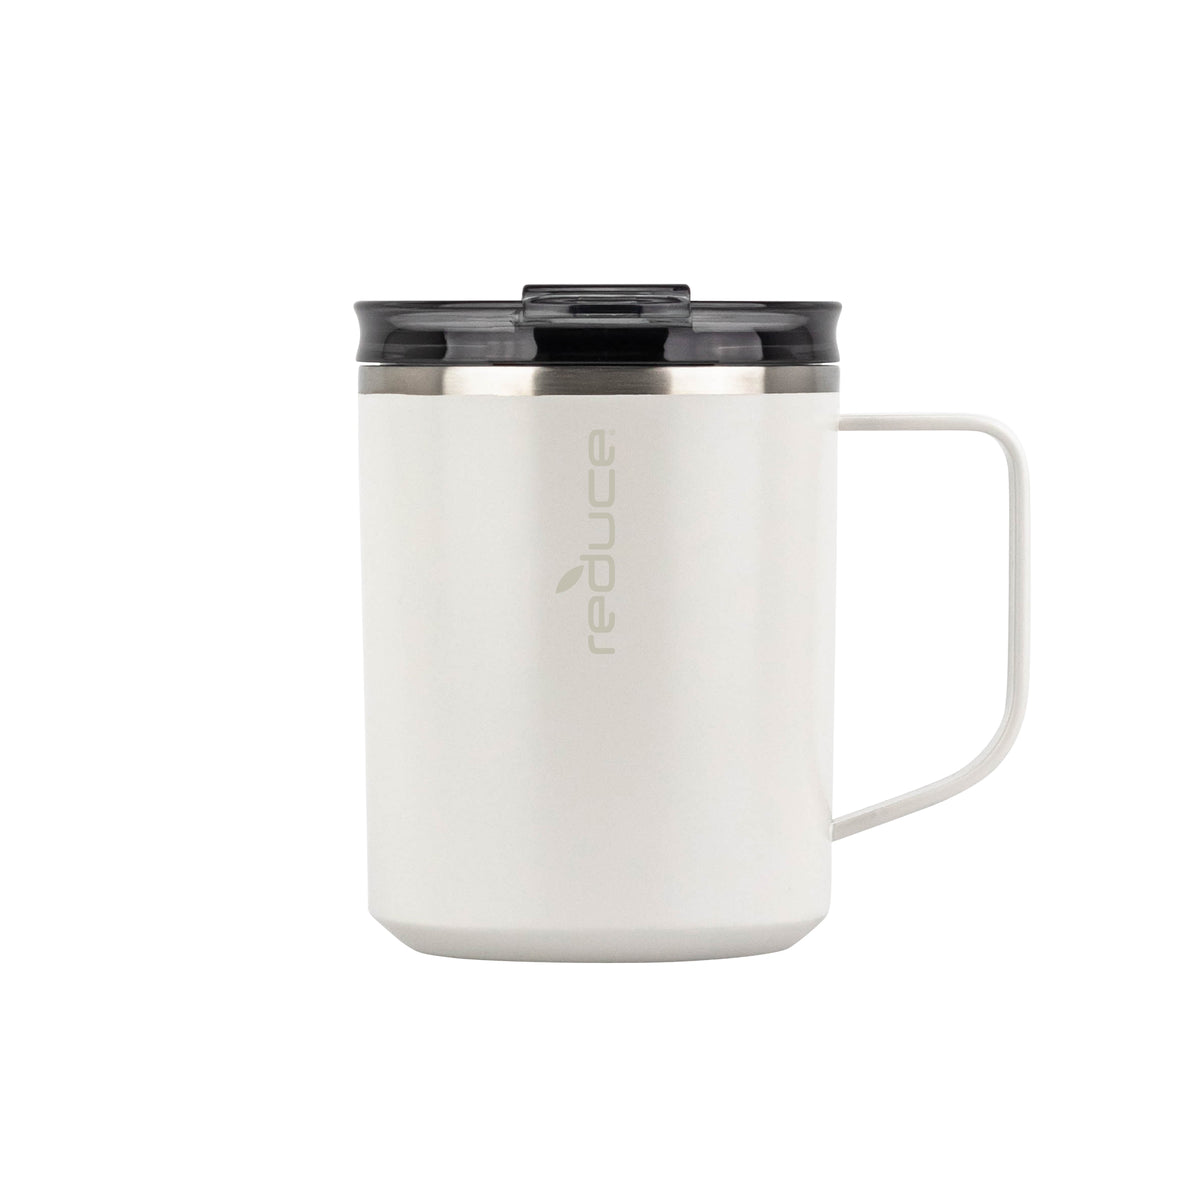 Reduce Reusable Hot Coffee Mug - Eucalyptus - 14 oz